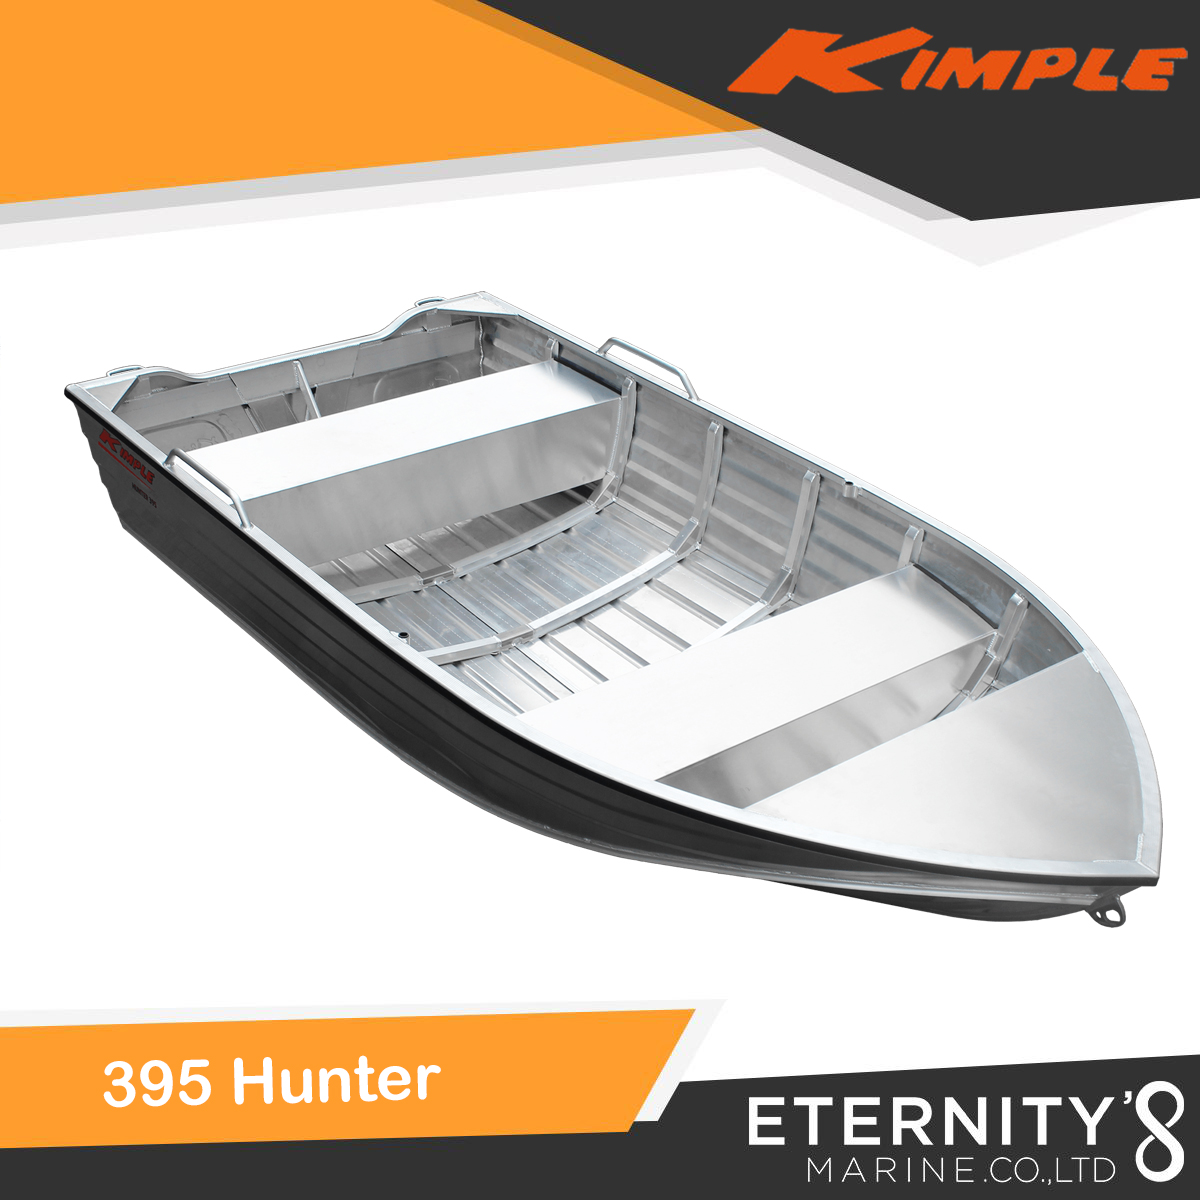 Kimple 395 Hunter